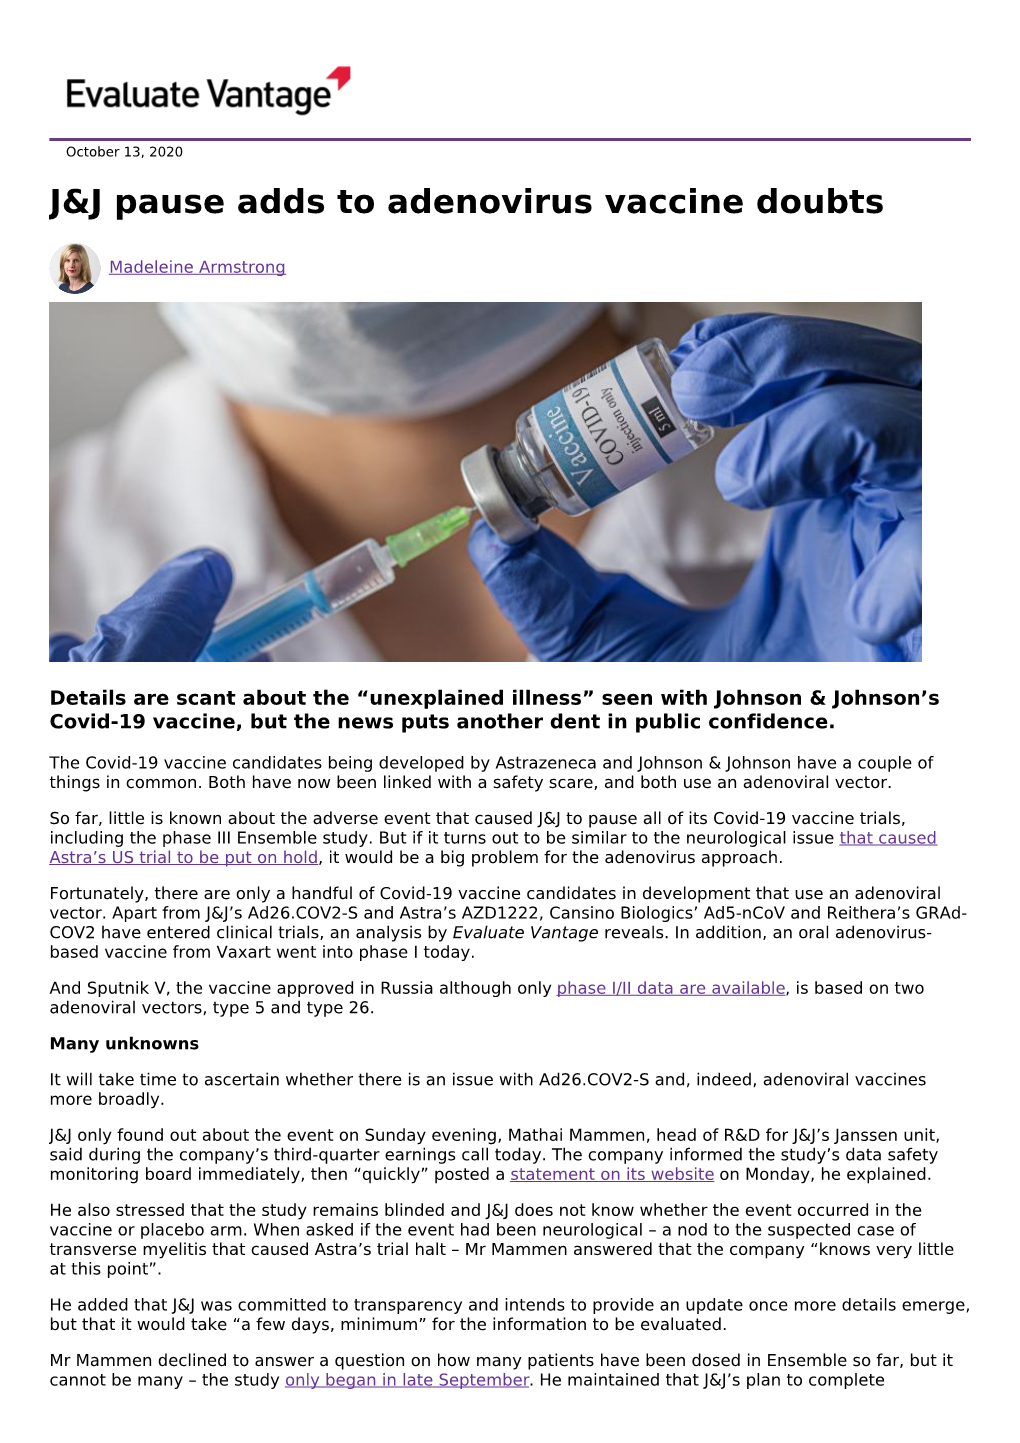 J&J Pause Adds to Adenovirus Vaccine Doubts